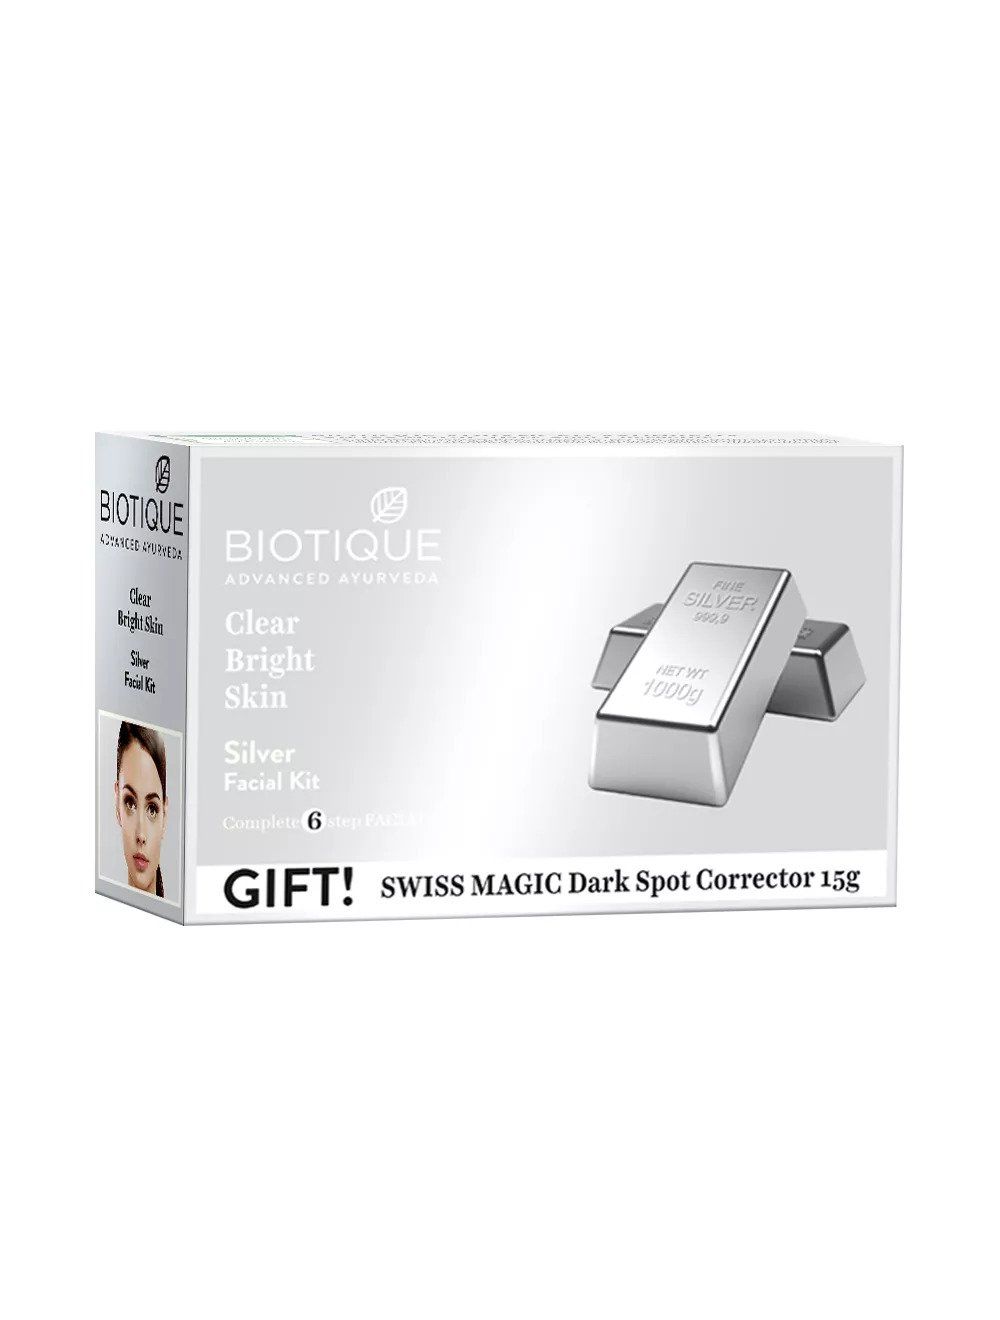 Biotique Silver Facial Kit (65gm) - Niram